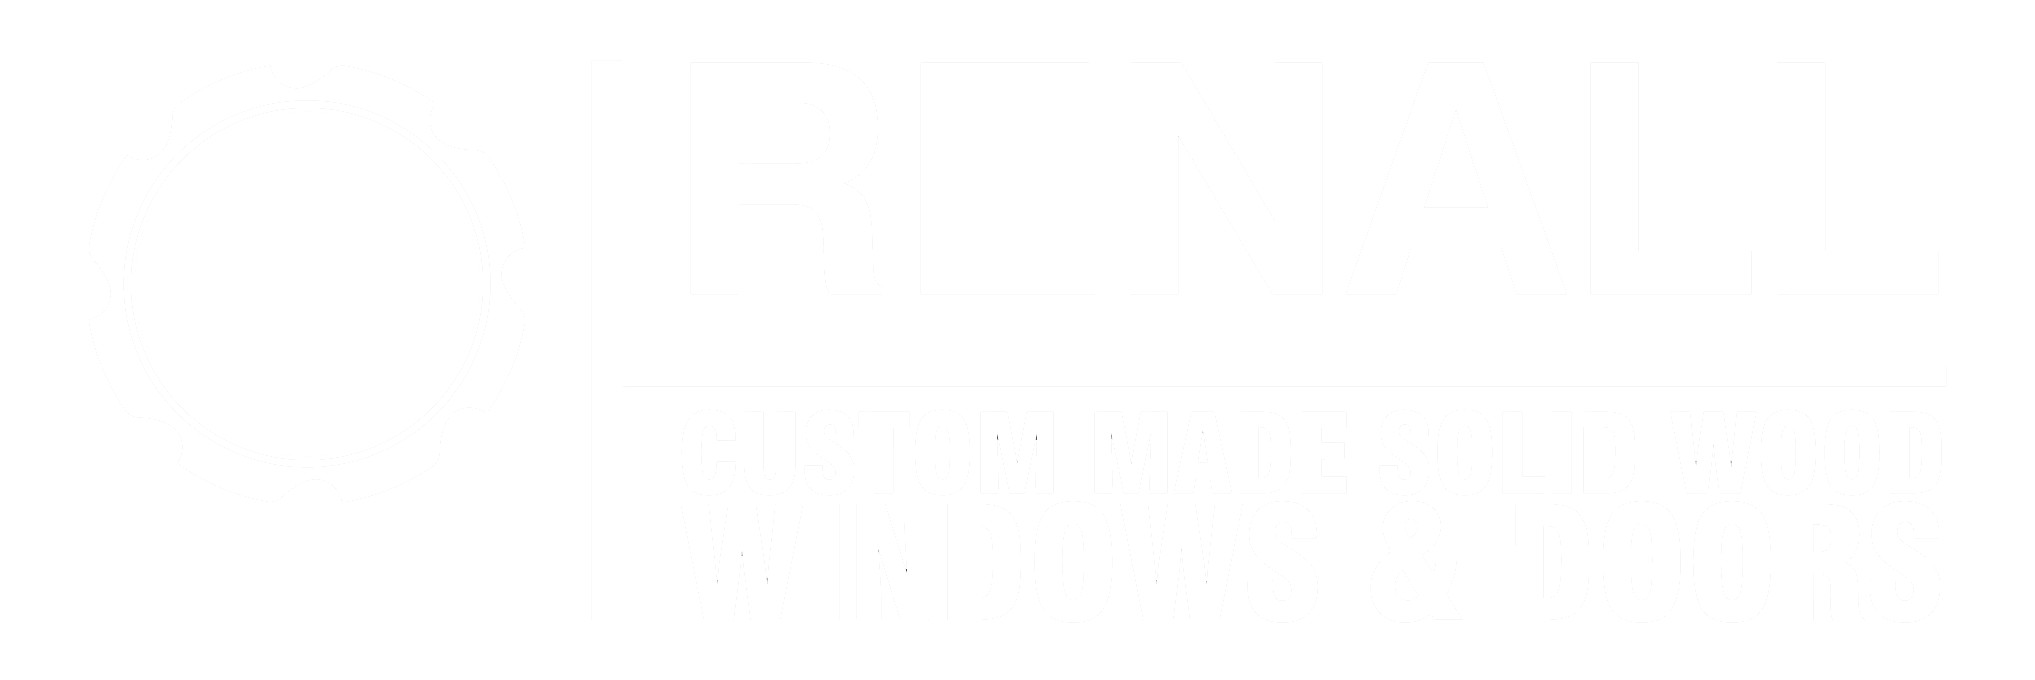 Renall Windows Logo